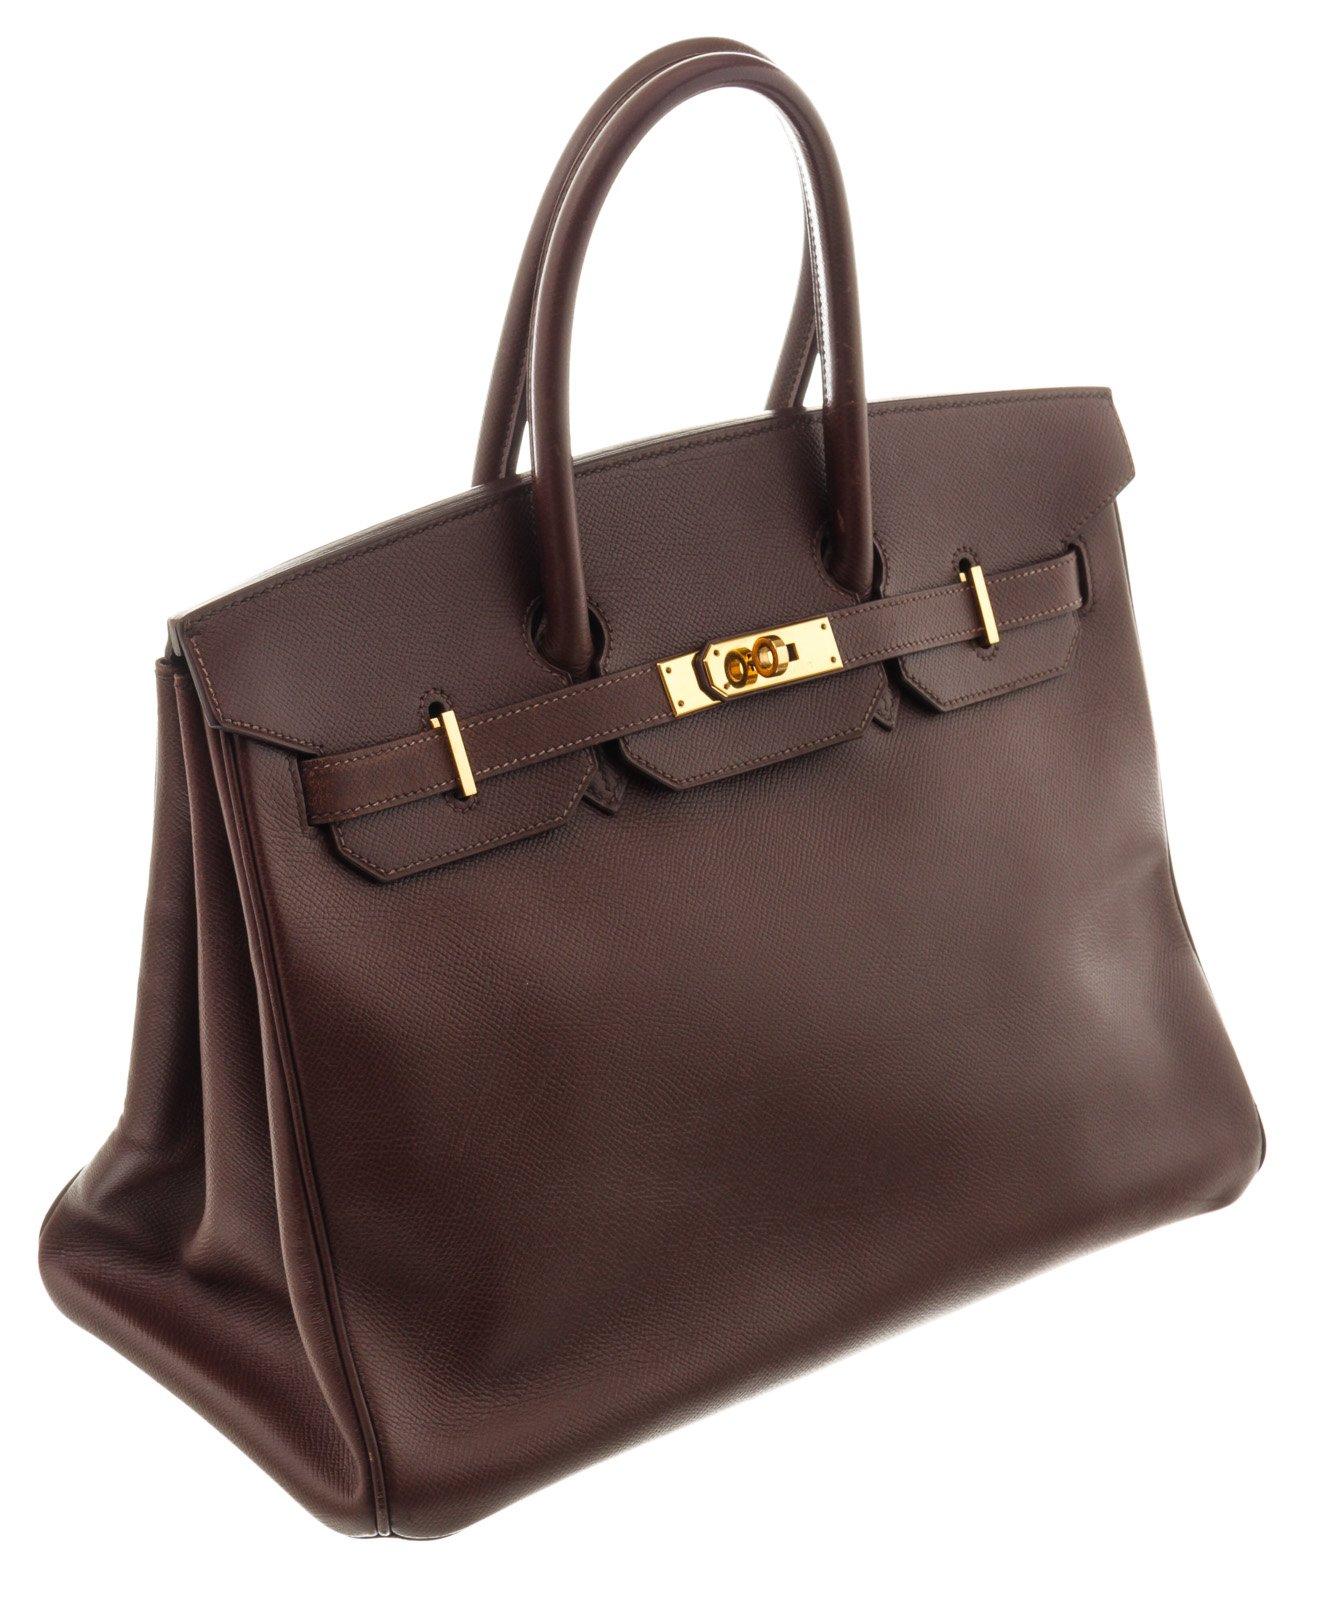 Hermes Brown Leather Birkin 35cm Satchel Bag 2